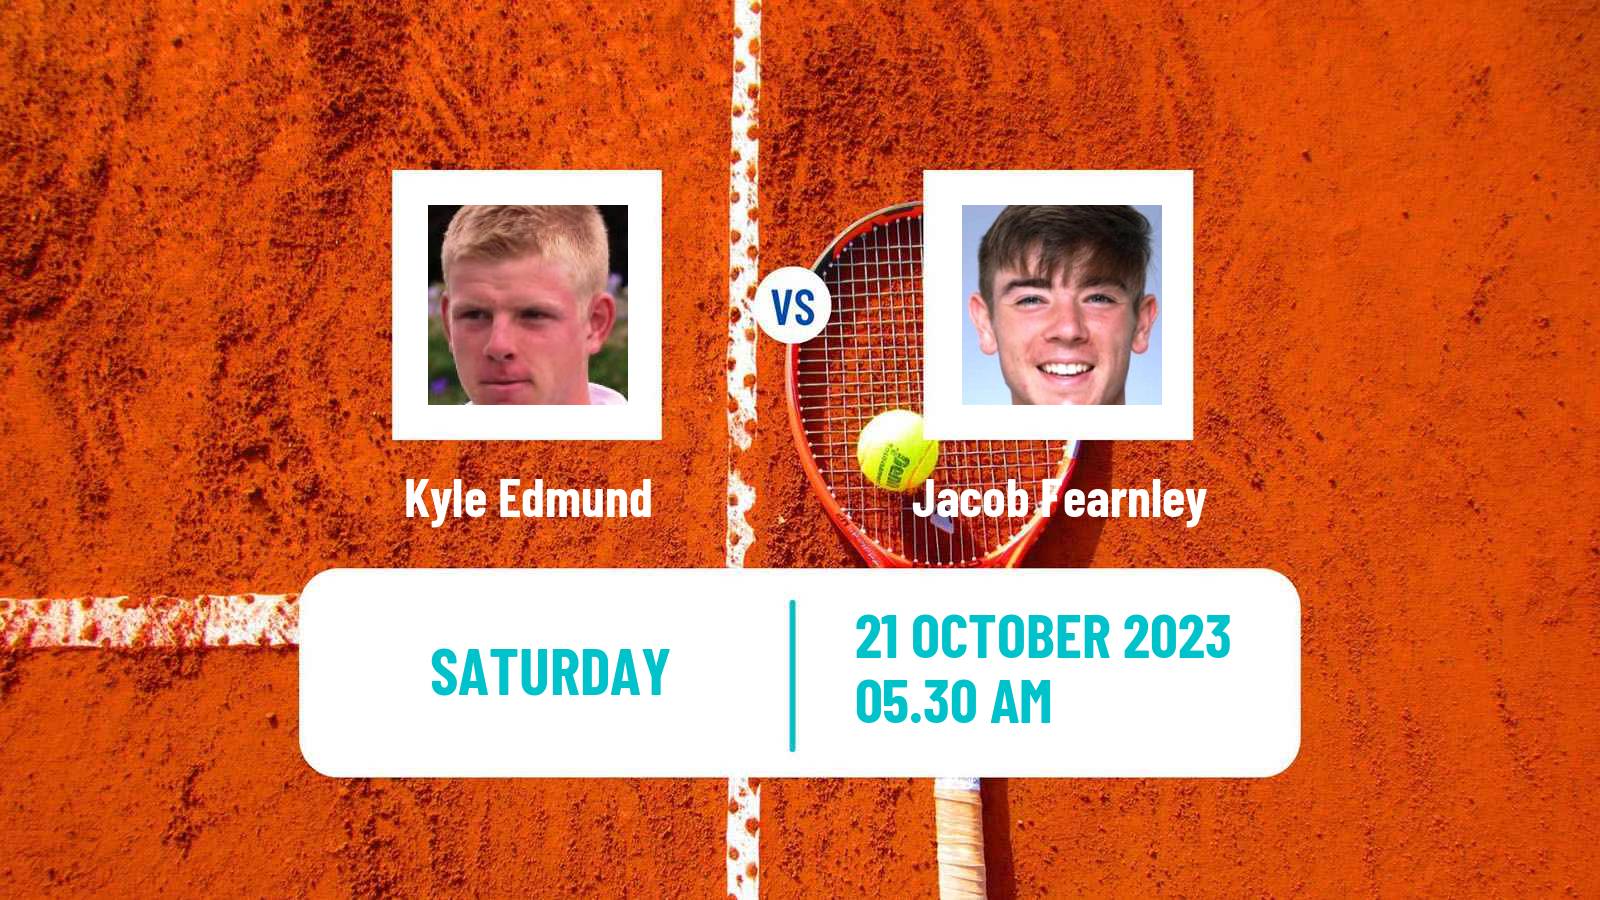 Tennis ITF M25 Edgbaston Men Kyle Edmund - Jacob Fearnley